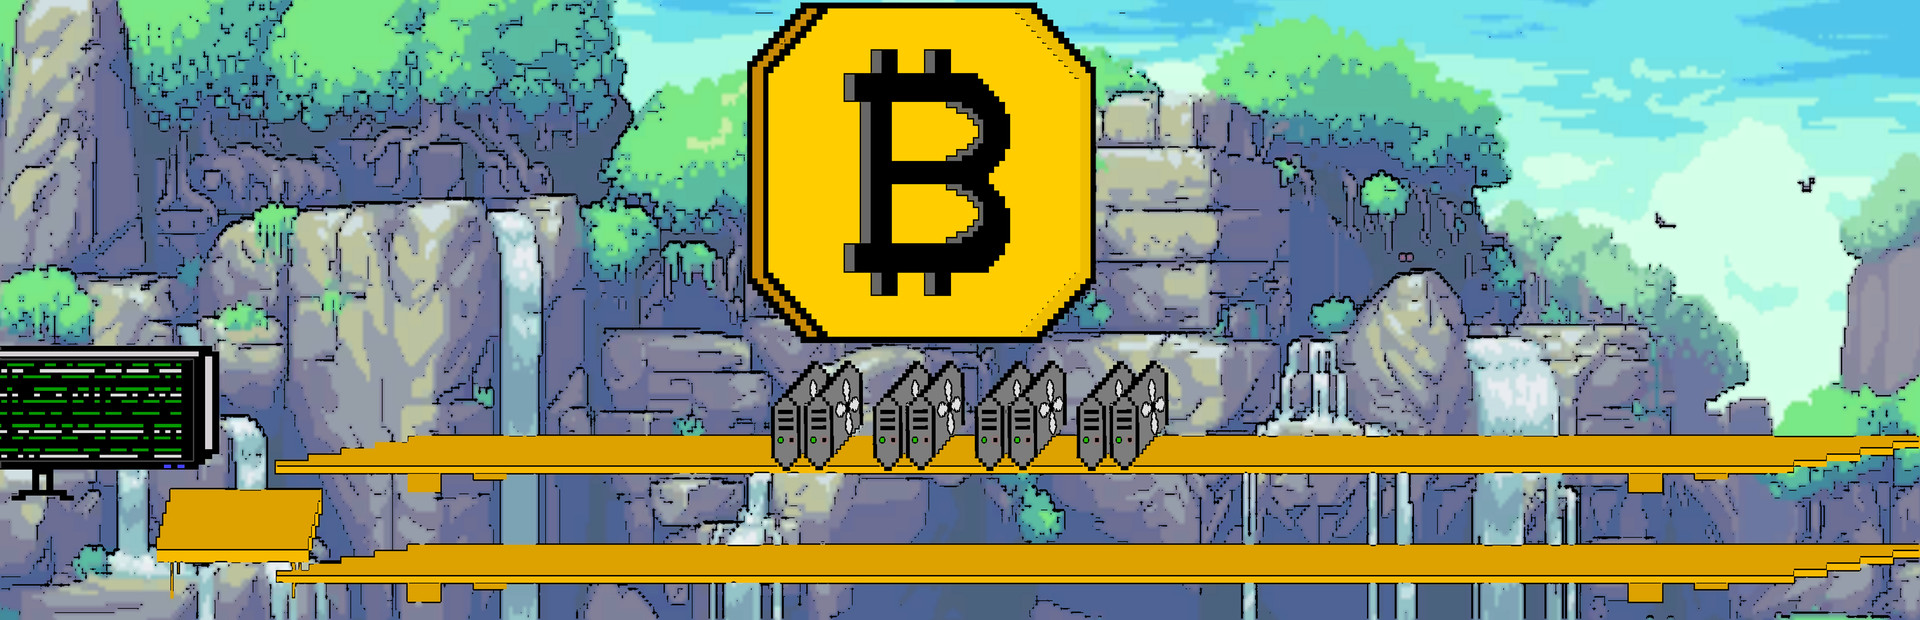 Bitcoin Farm cover image